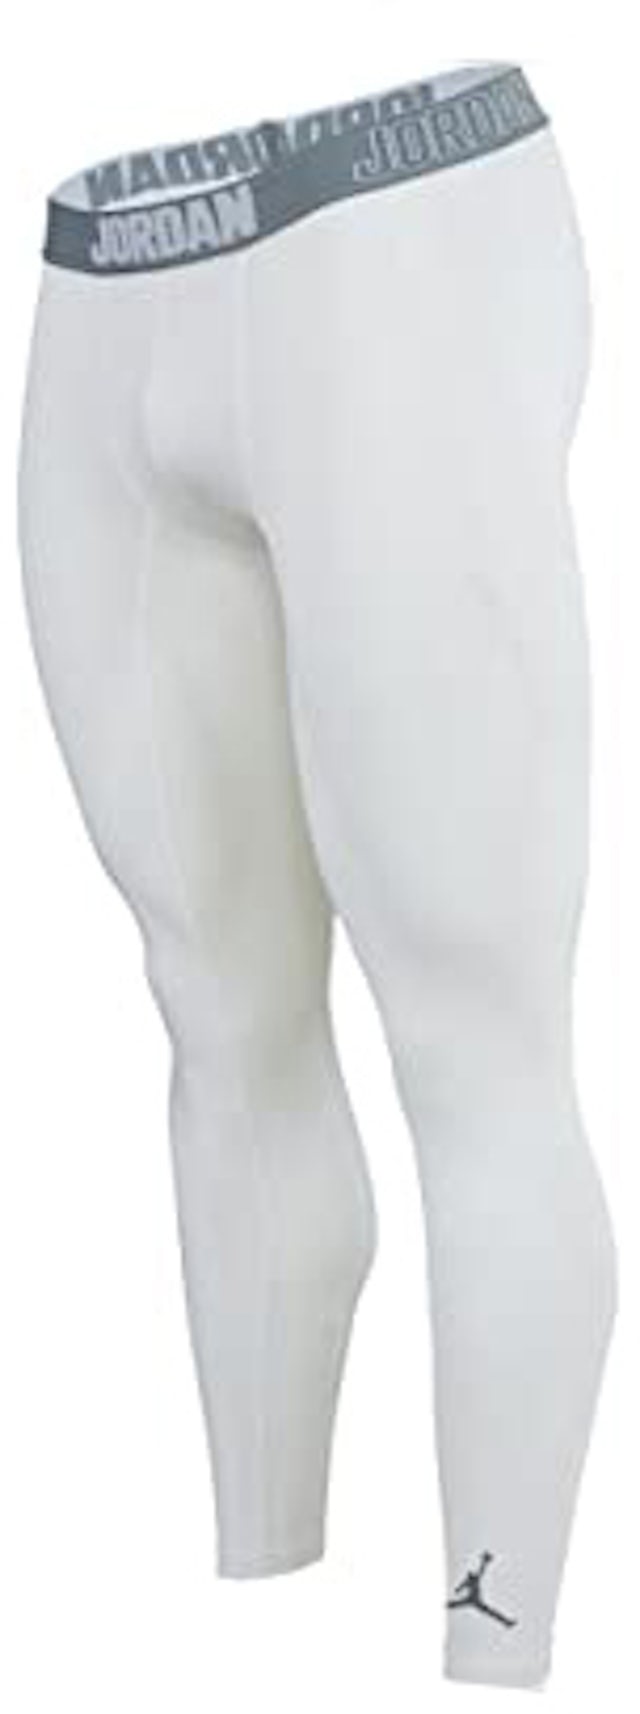 Jordan All Season Compression Tight Pants White/Grey SS22 Men's - US